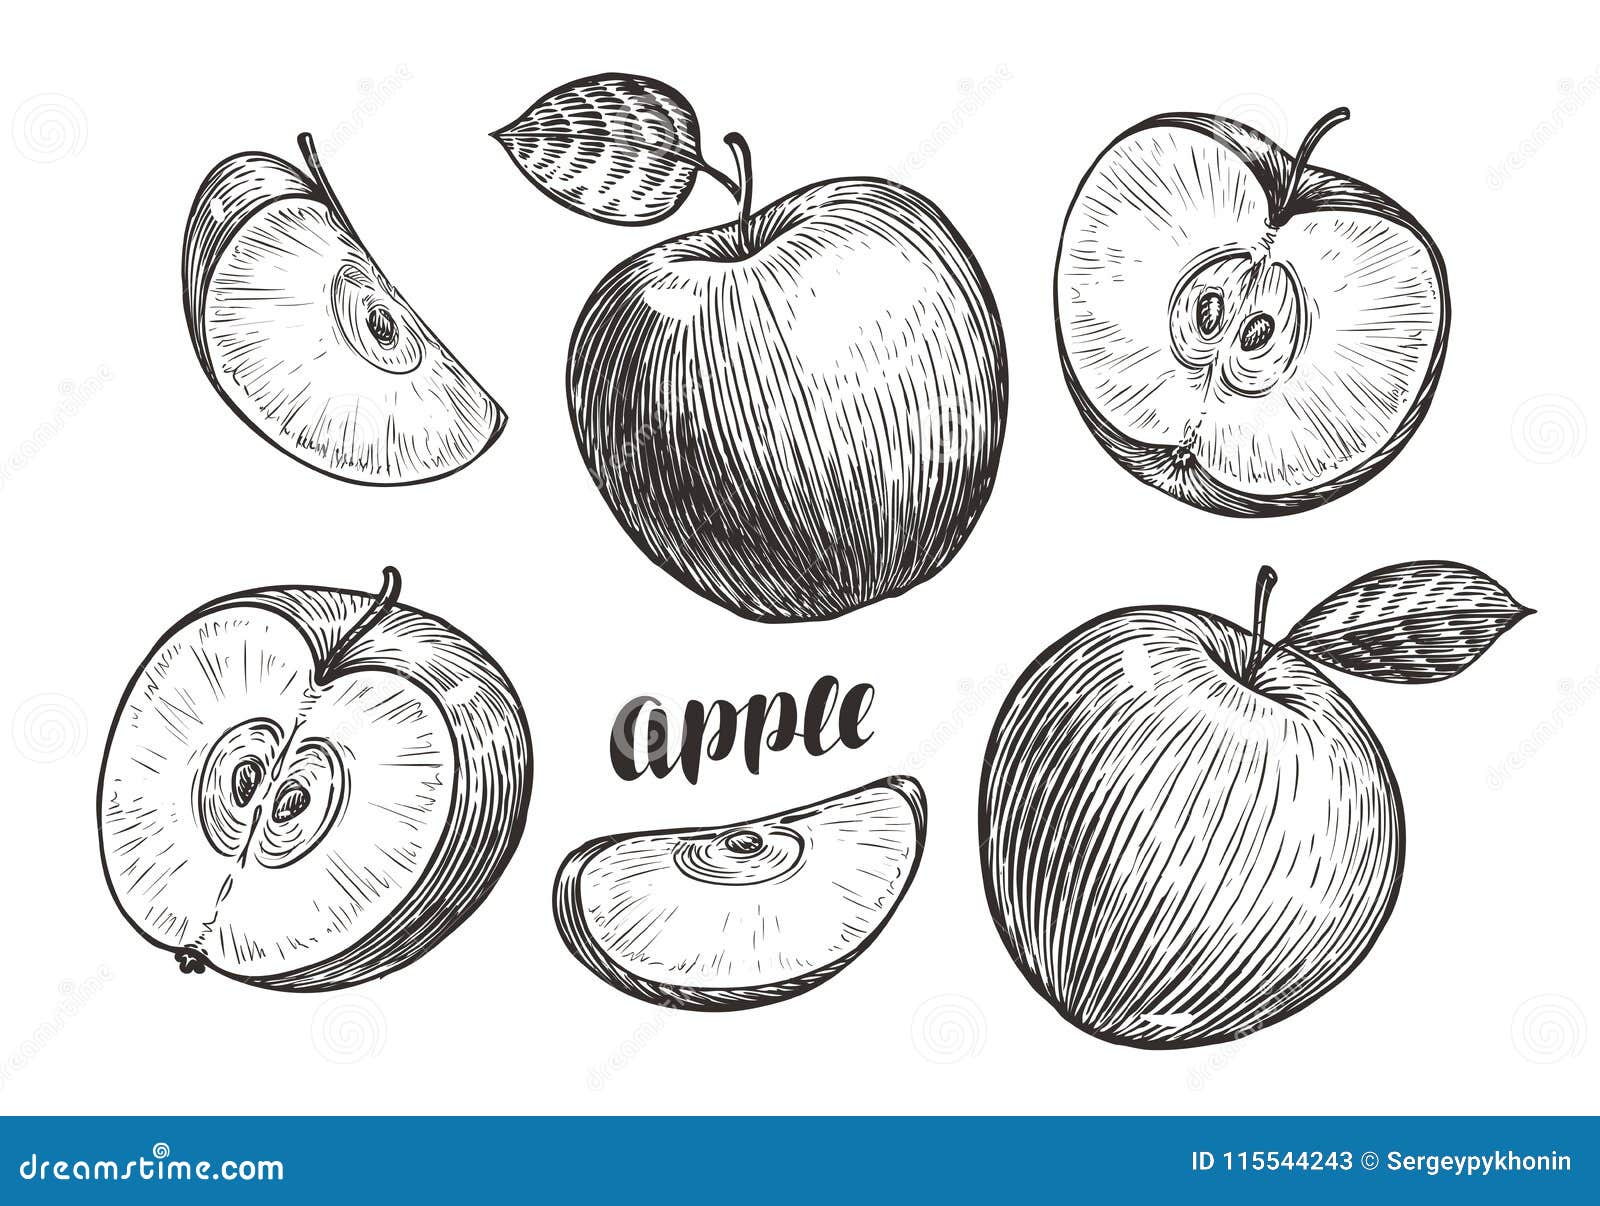 Yummy apple fruit drawing free image download